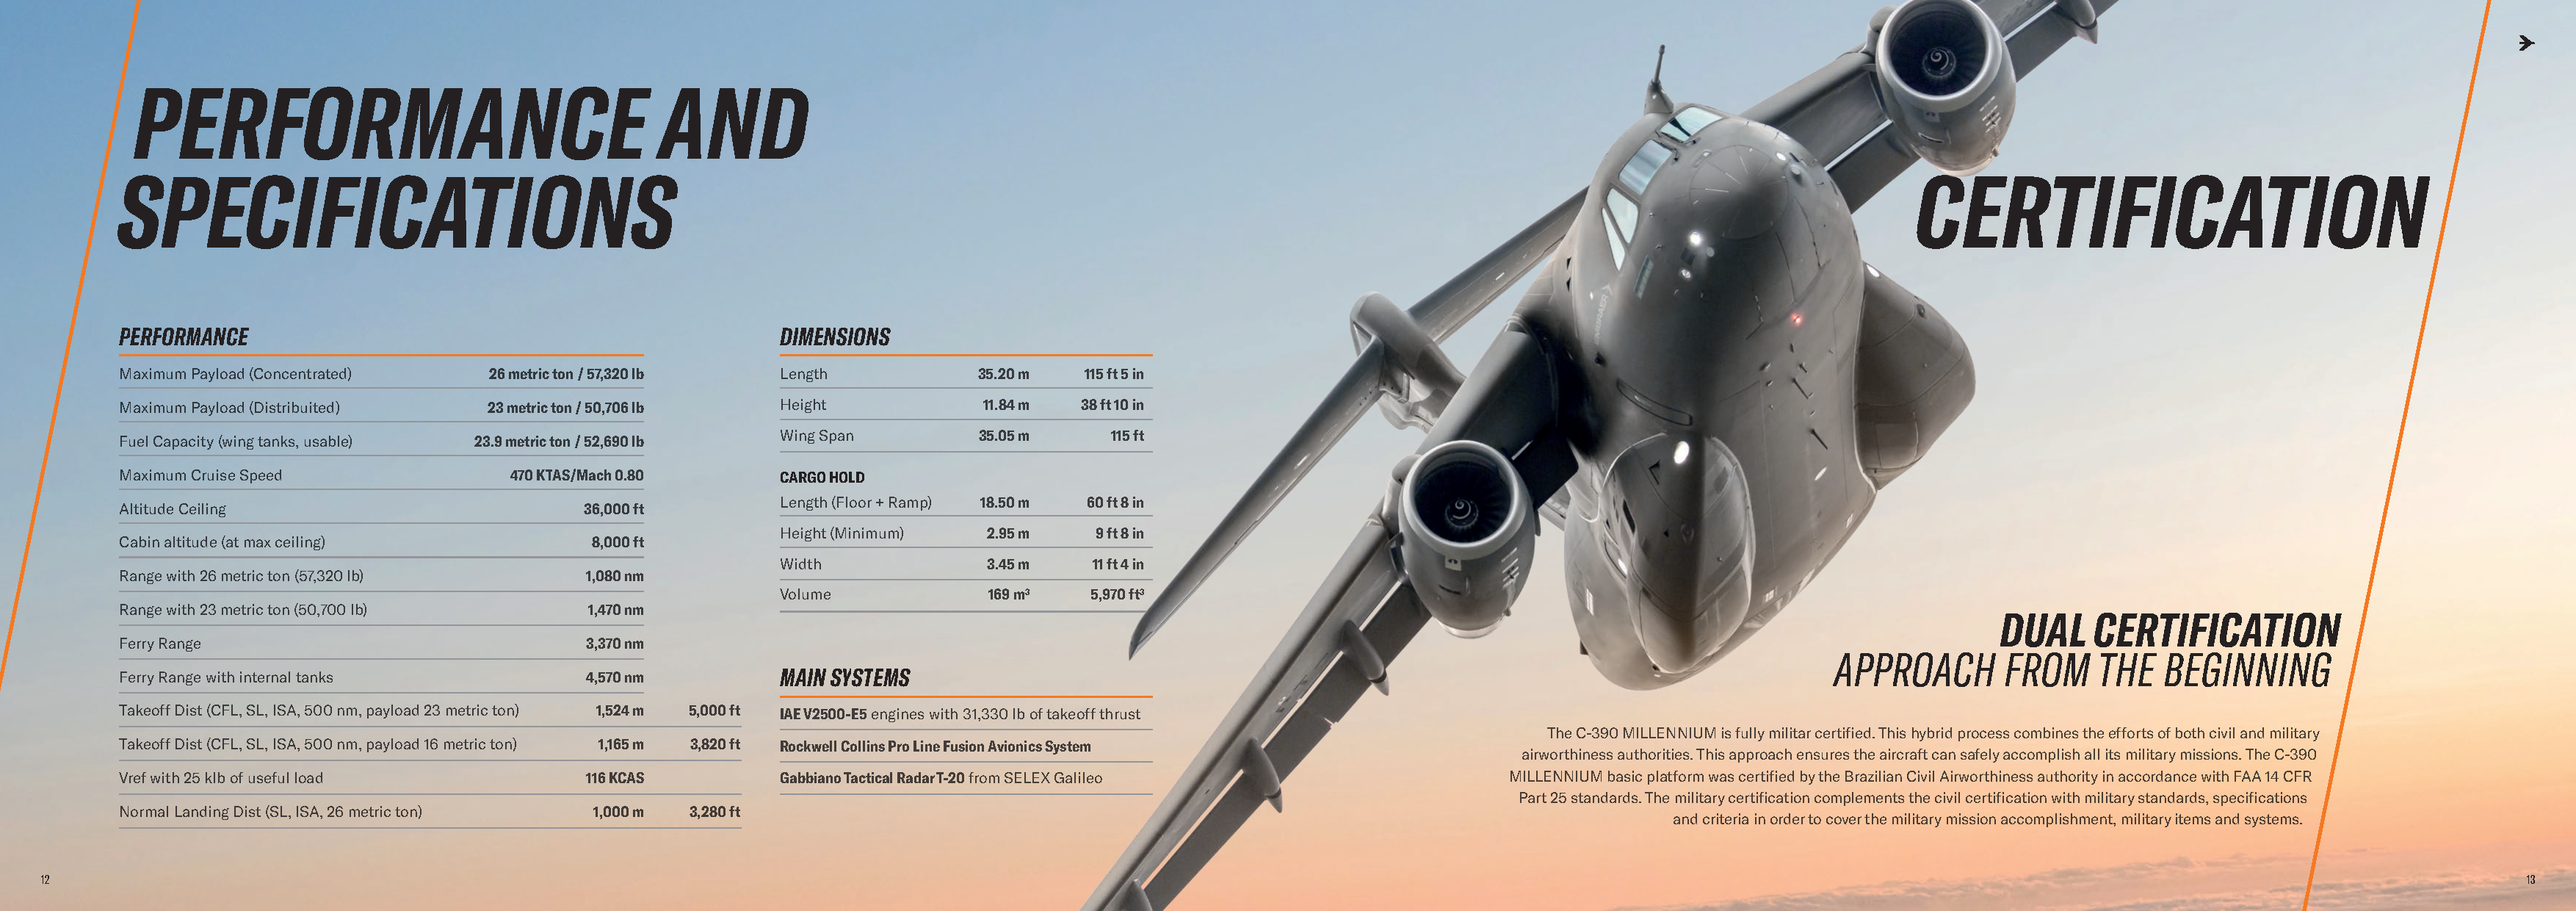 Future of Embraer's KC-390 Millennium Depends on Profitabilty